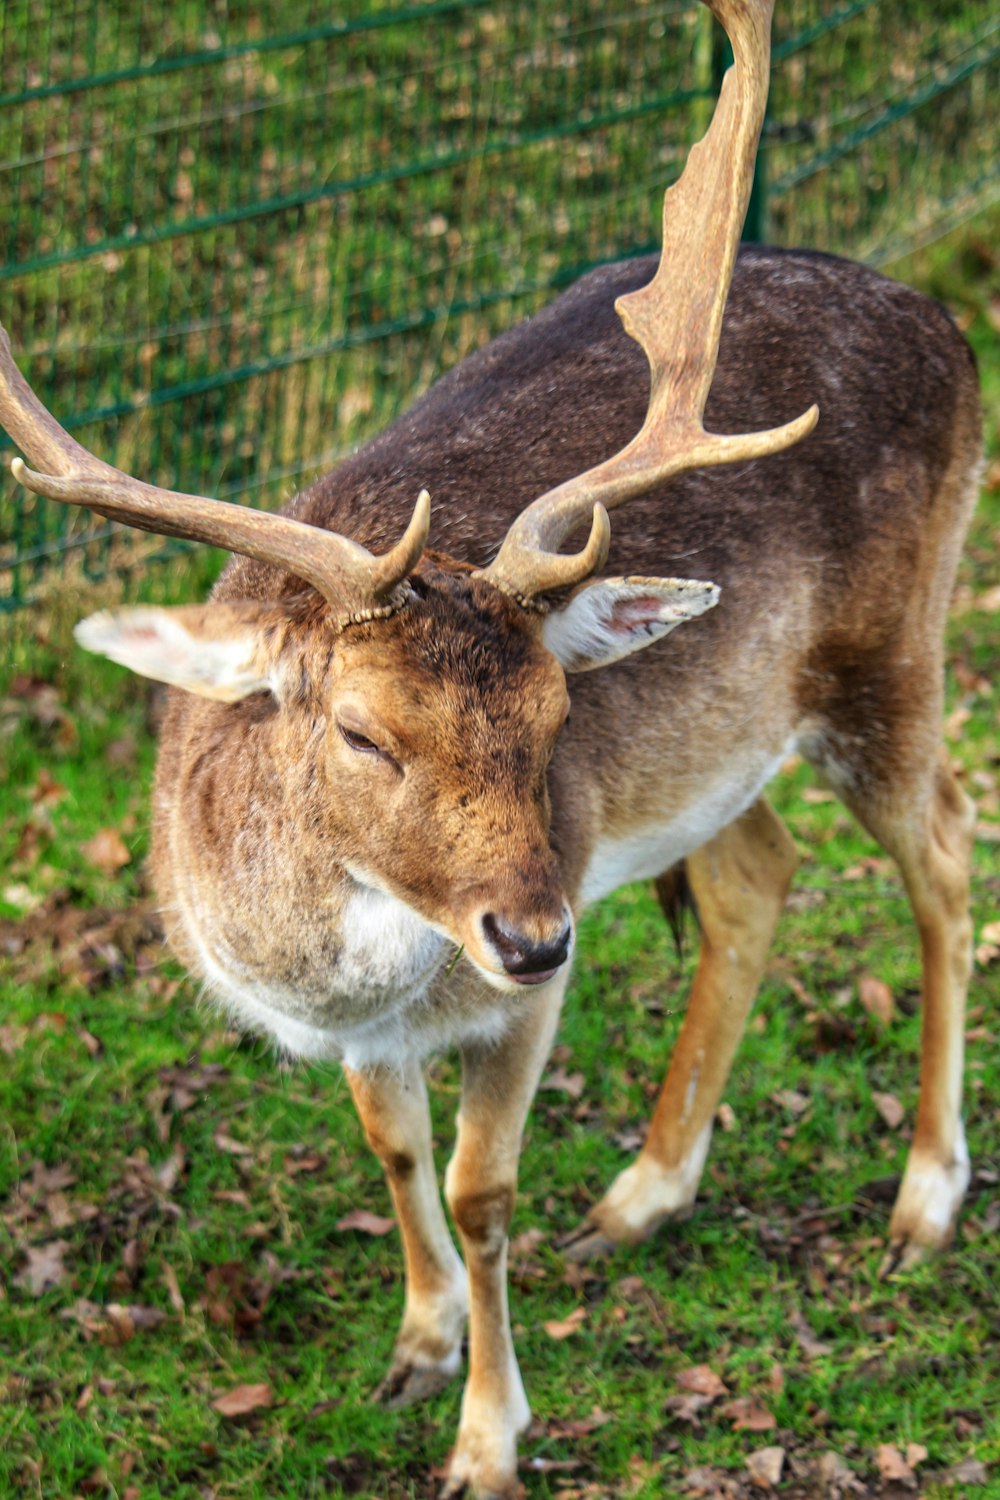 a close up of a deer near a fence